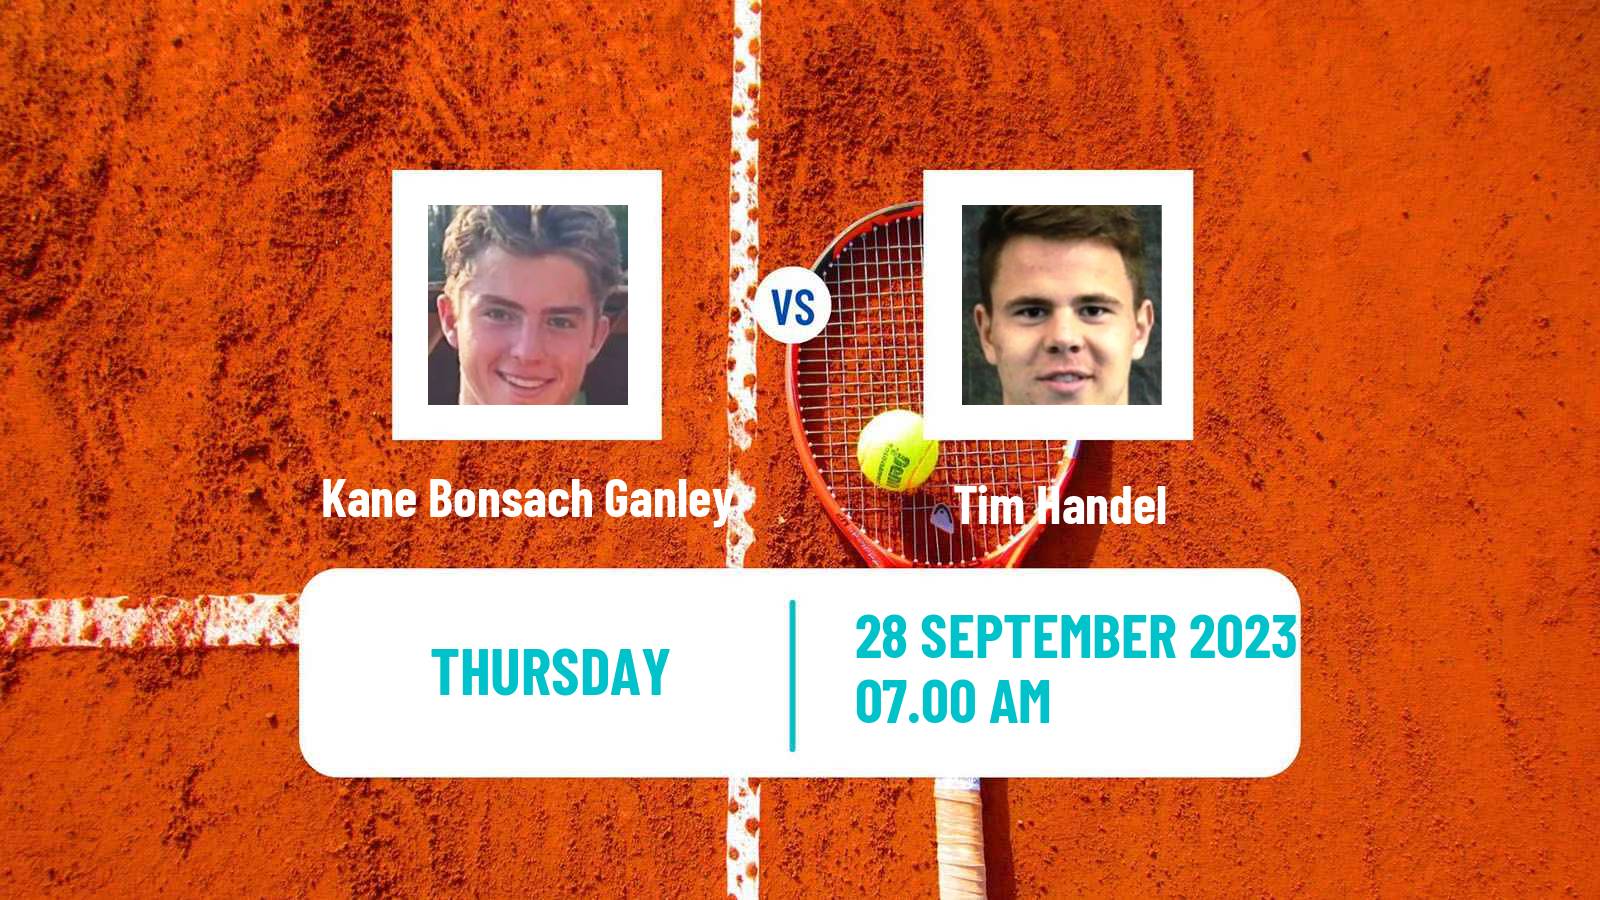 Tennis ITF M25 Sabadell 2 Men Kane Bonsach Ganley - Tim Handel